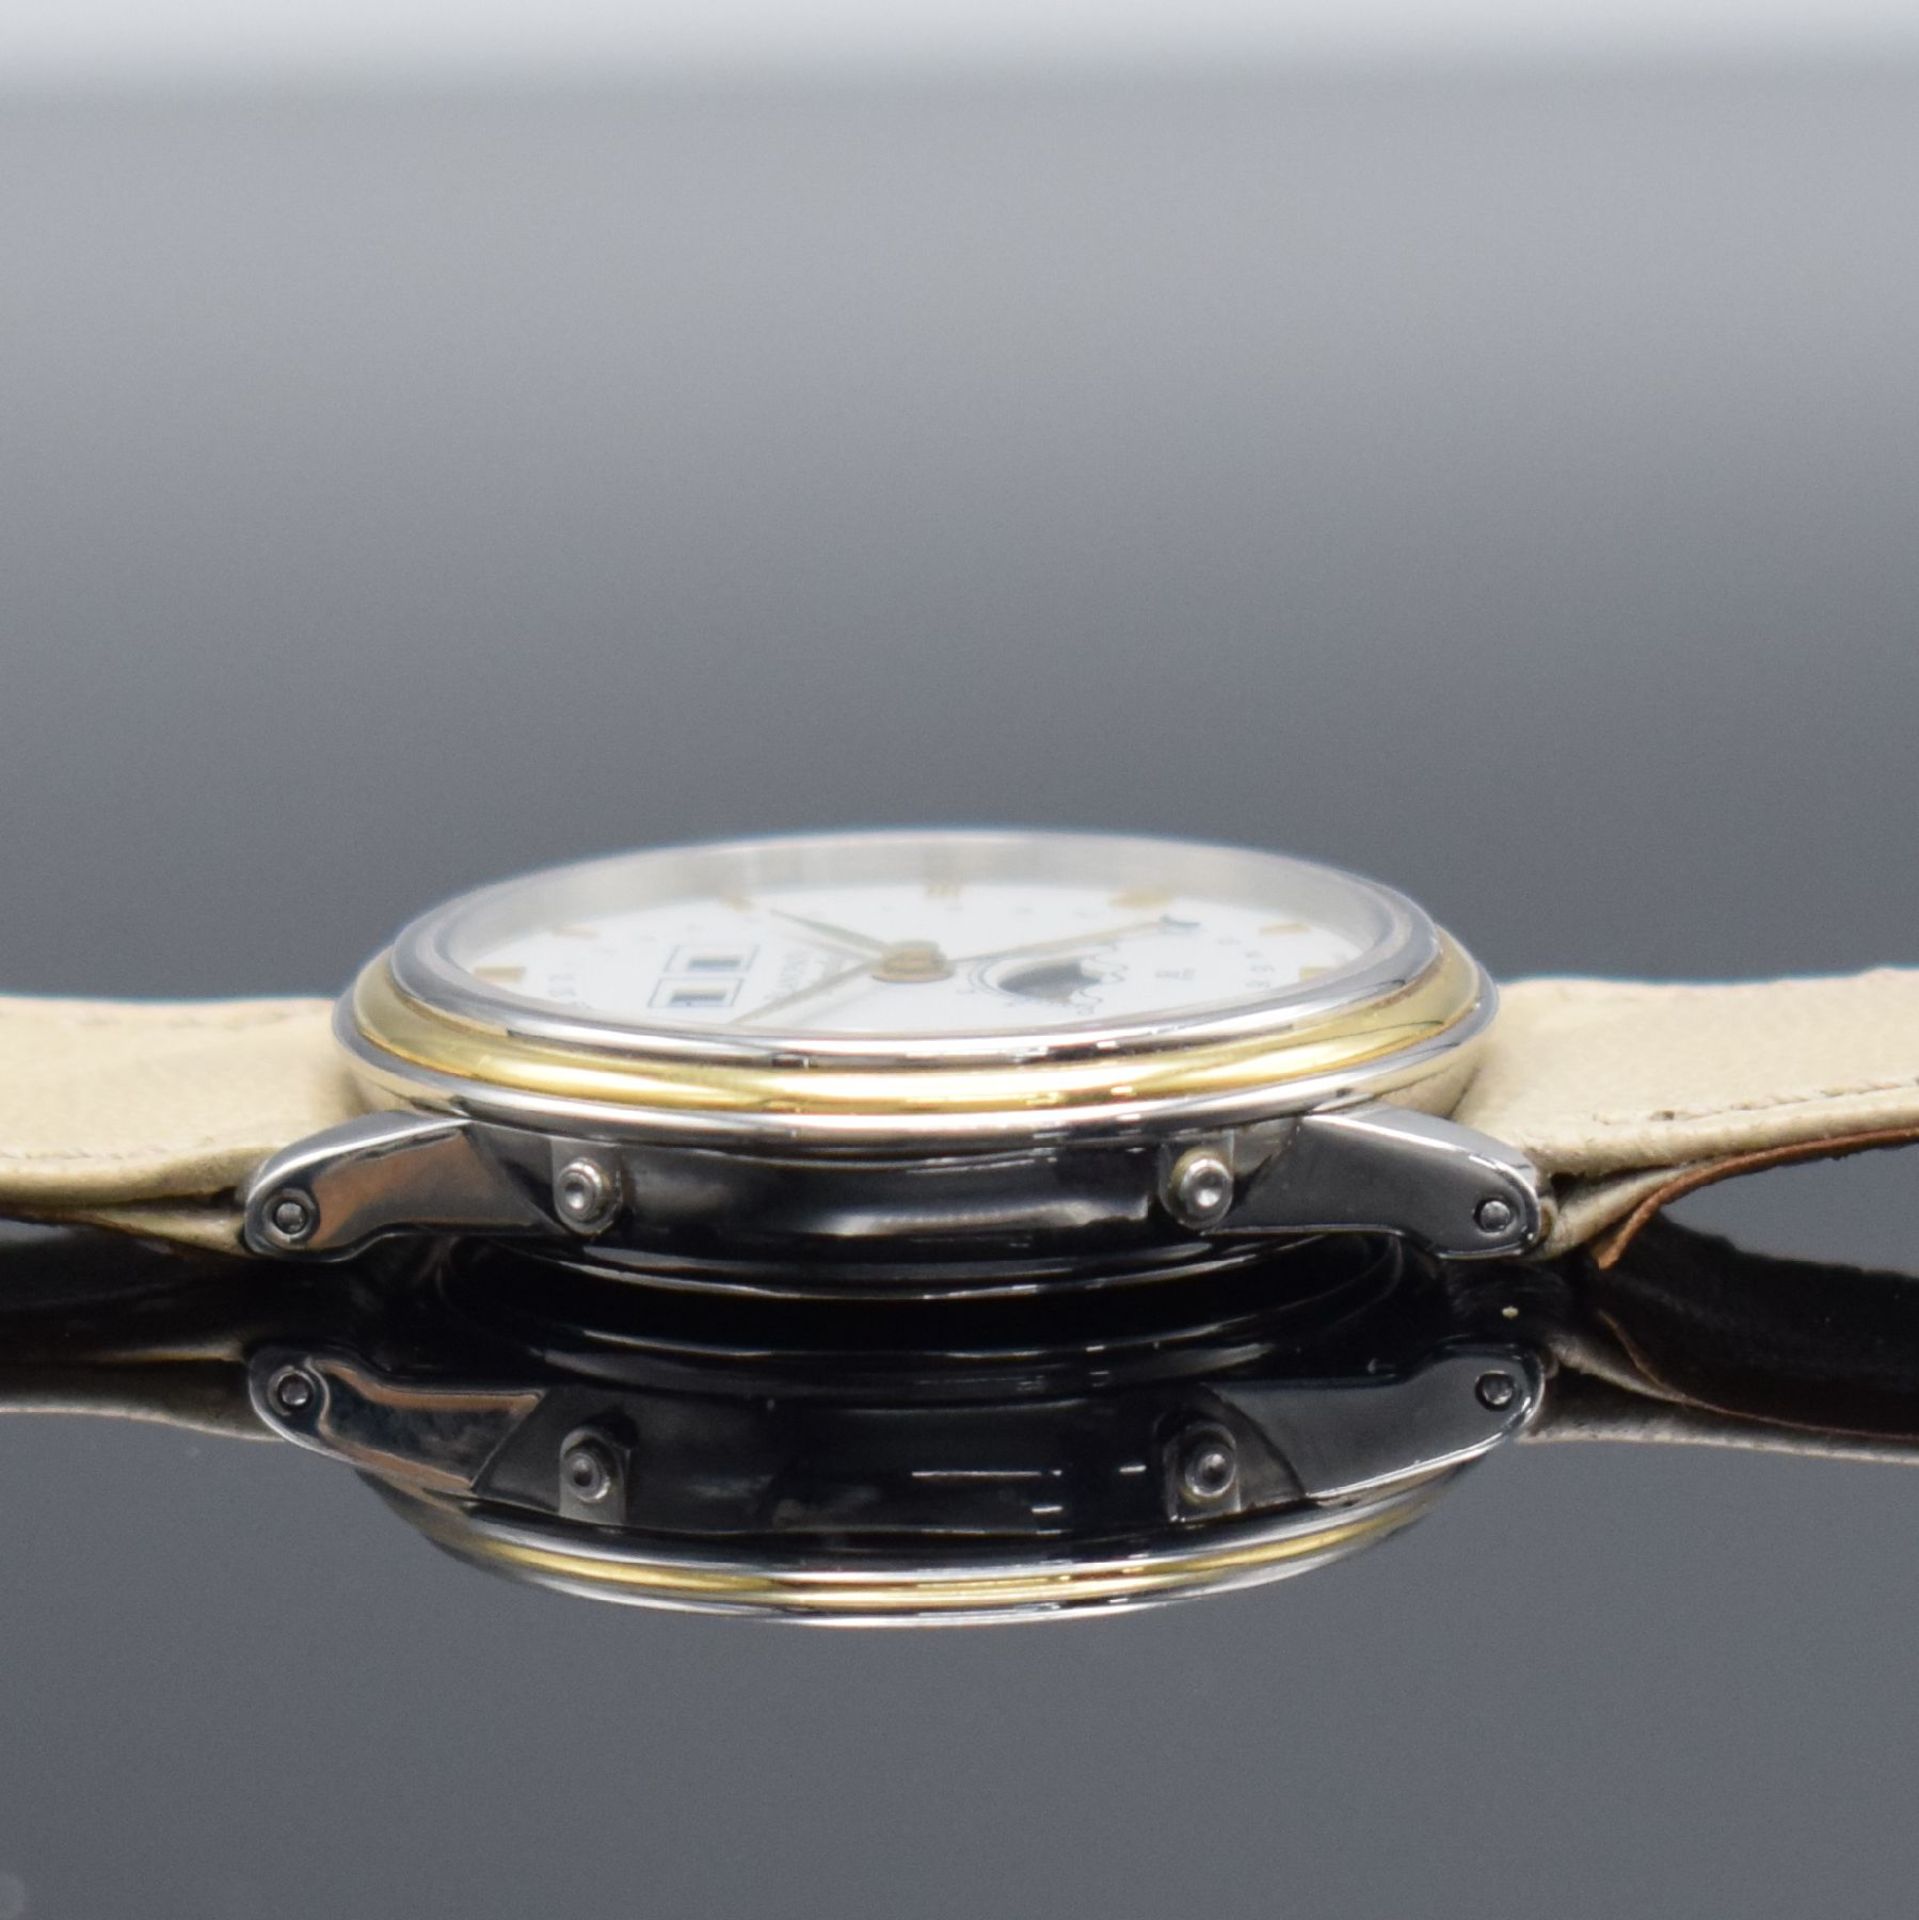 BLANCPAIN Armbanduhr mit Vollkalender Kaliber 953, - Bild 5 aus 9